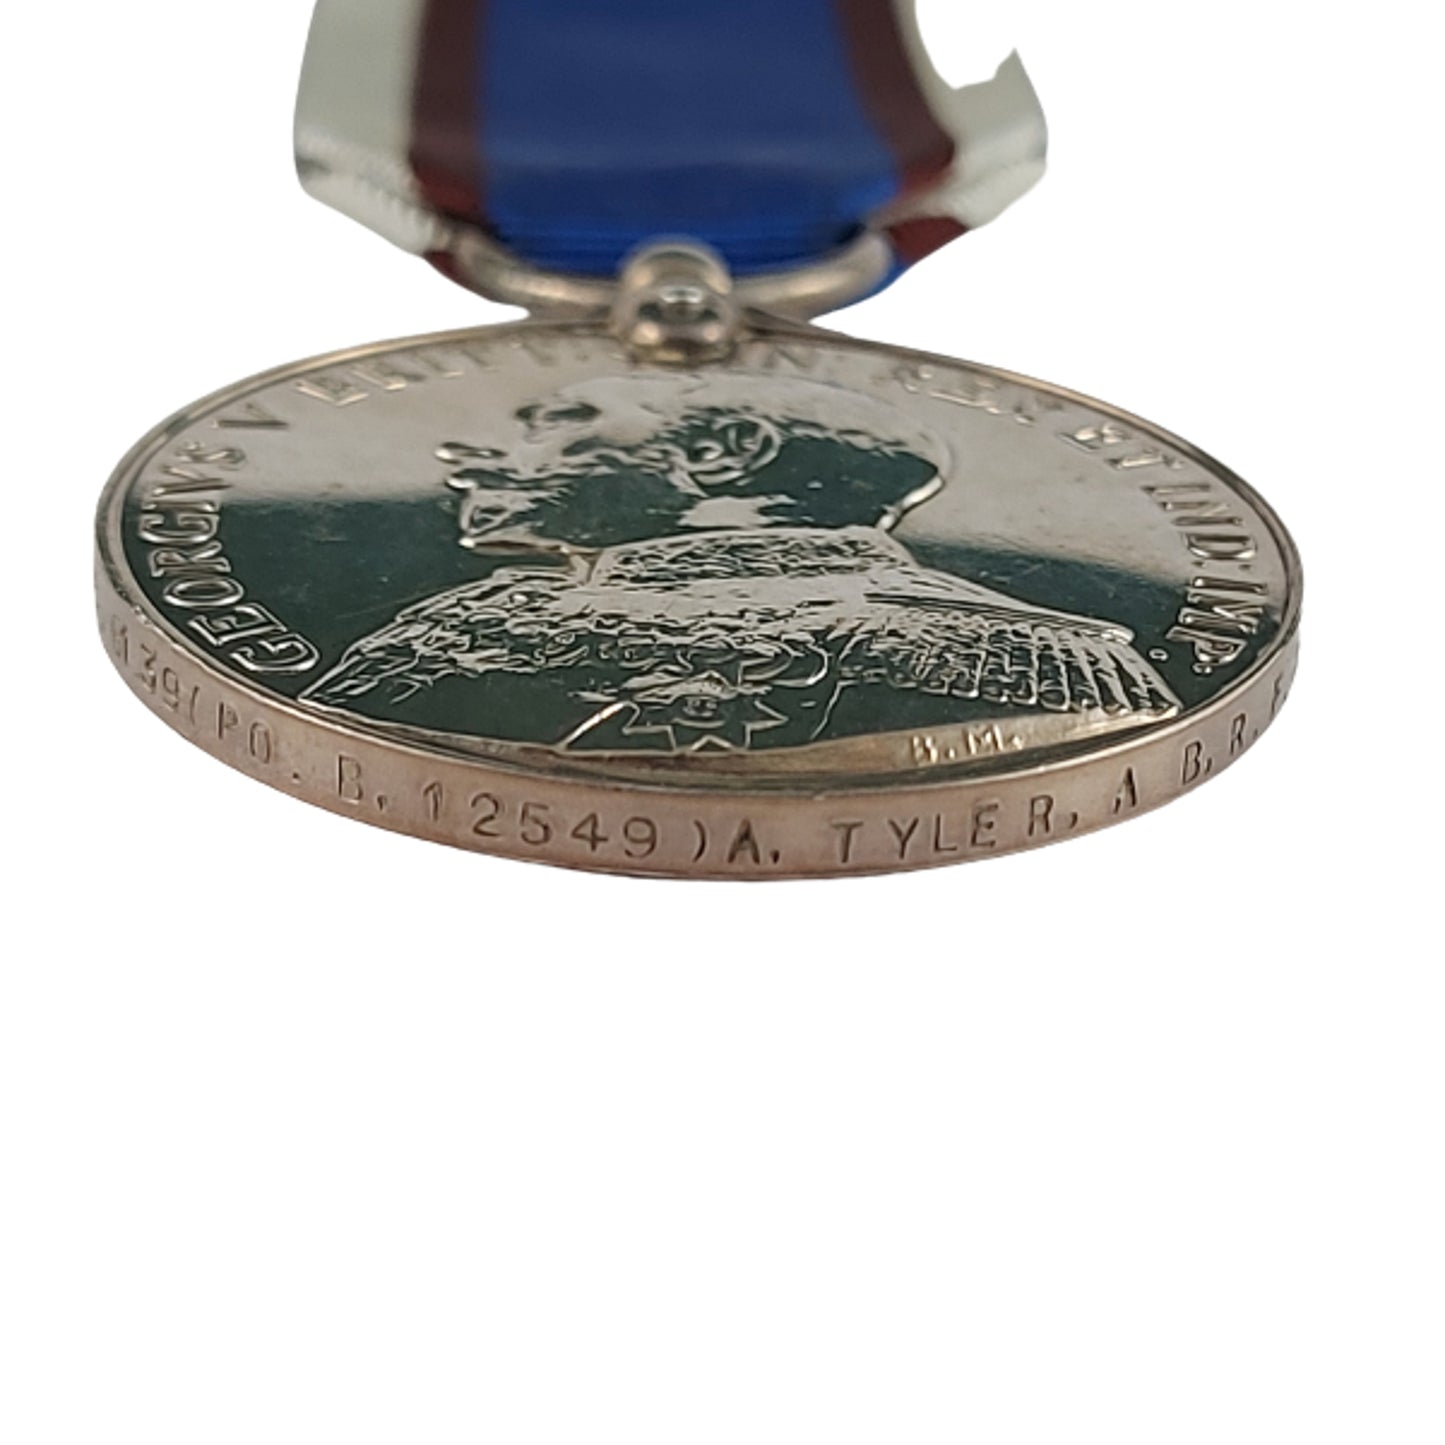 Post WW1 British Royal Fleet Reserve LSGC Long Service Good Conduct Medal